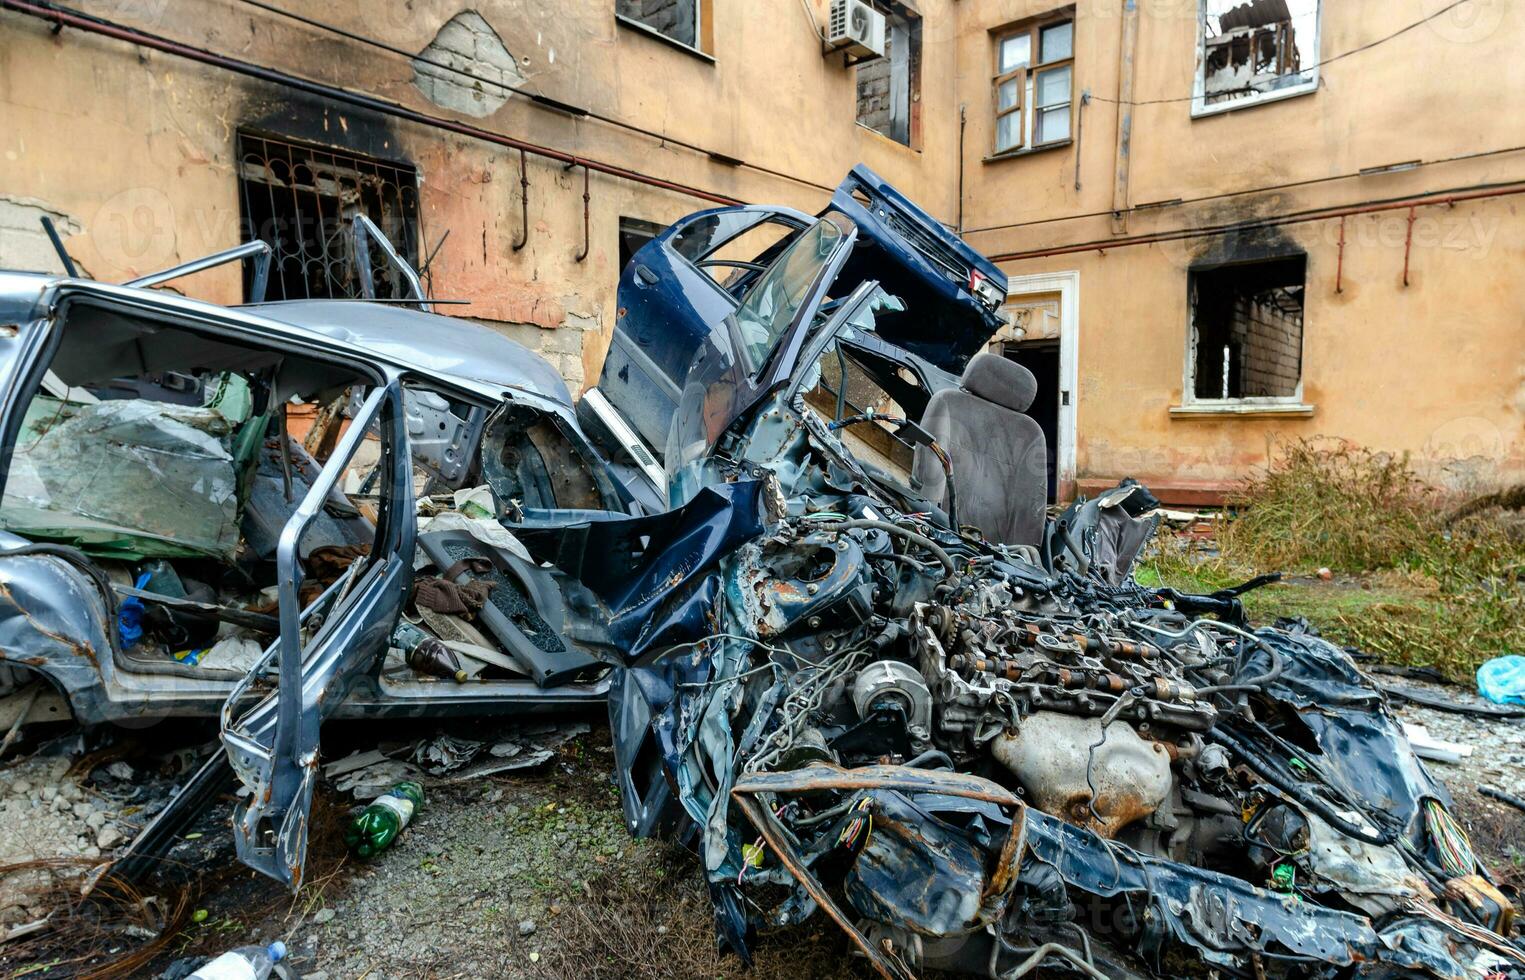 destruído e queimado casas dentro a cidade durante a guerra dentro Ucrânia foto